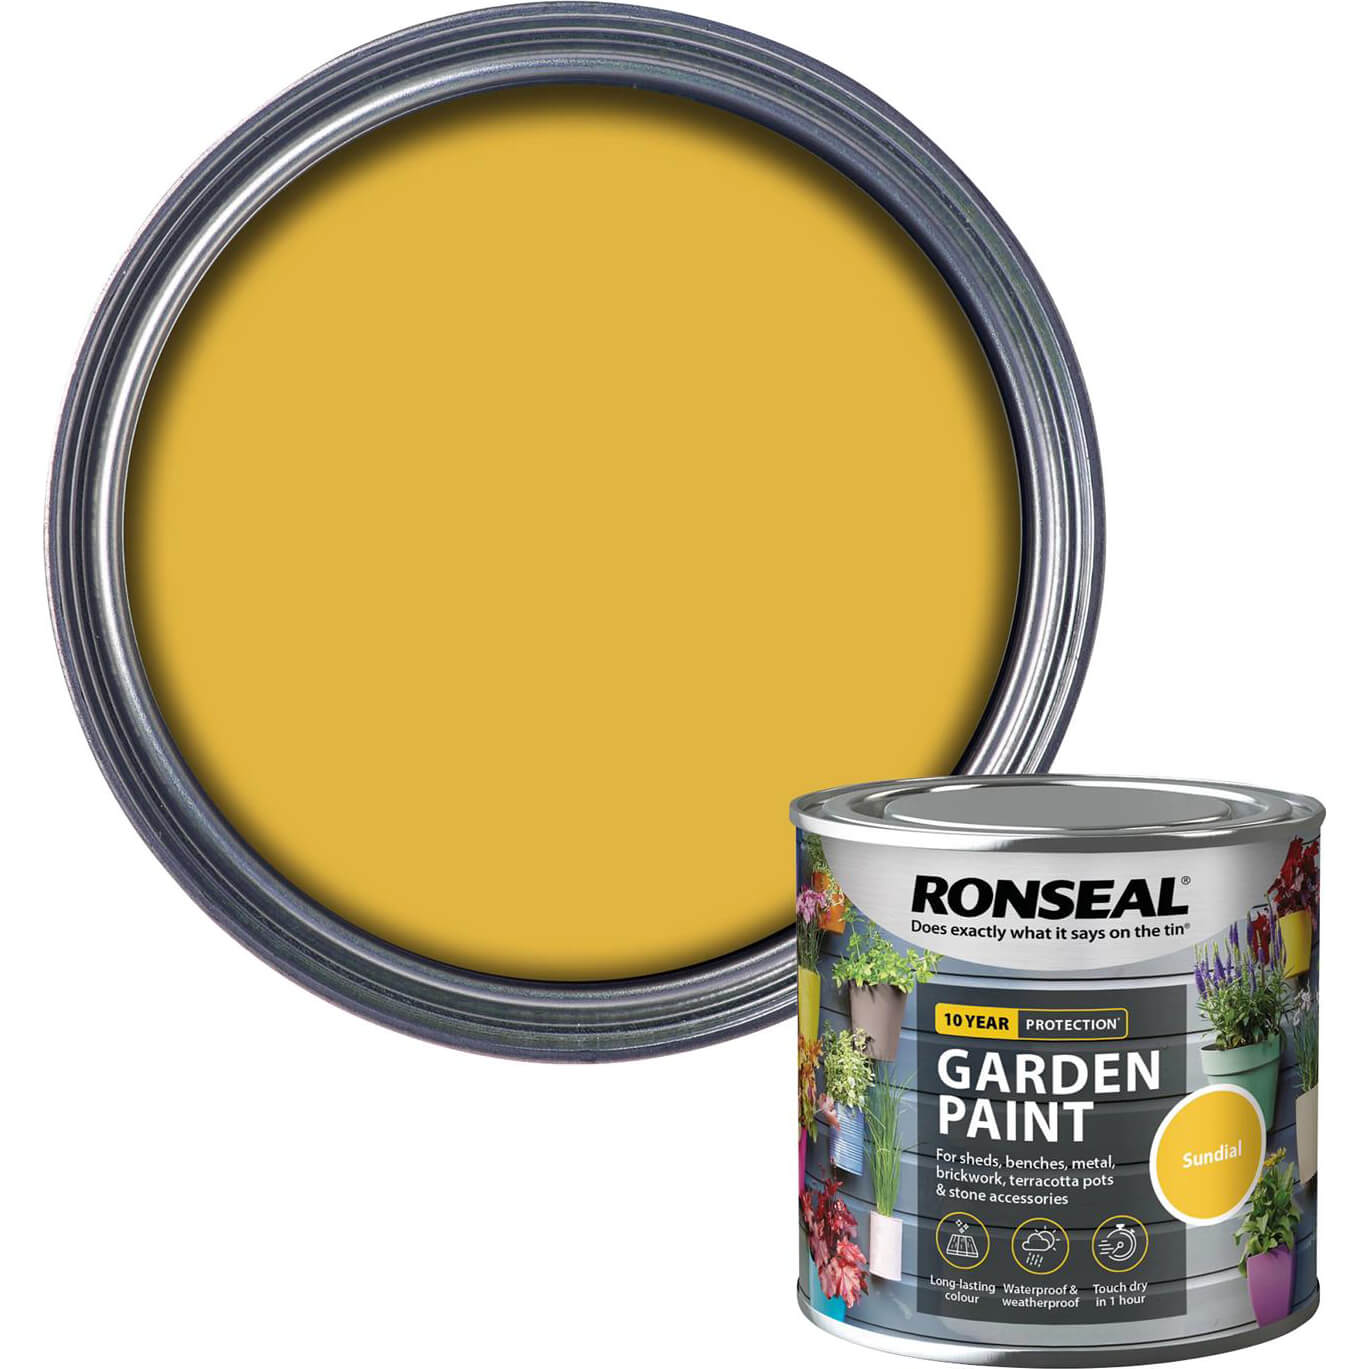 Image of Ronseal General Purpose Garden Paint Sunburst 250ml